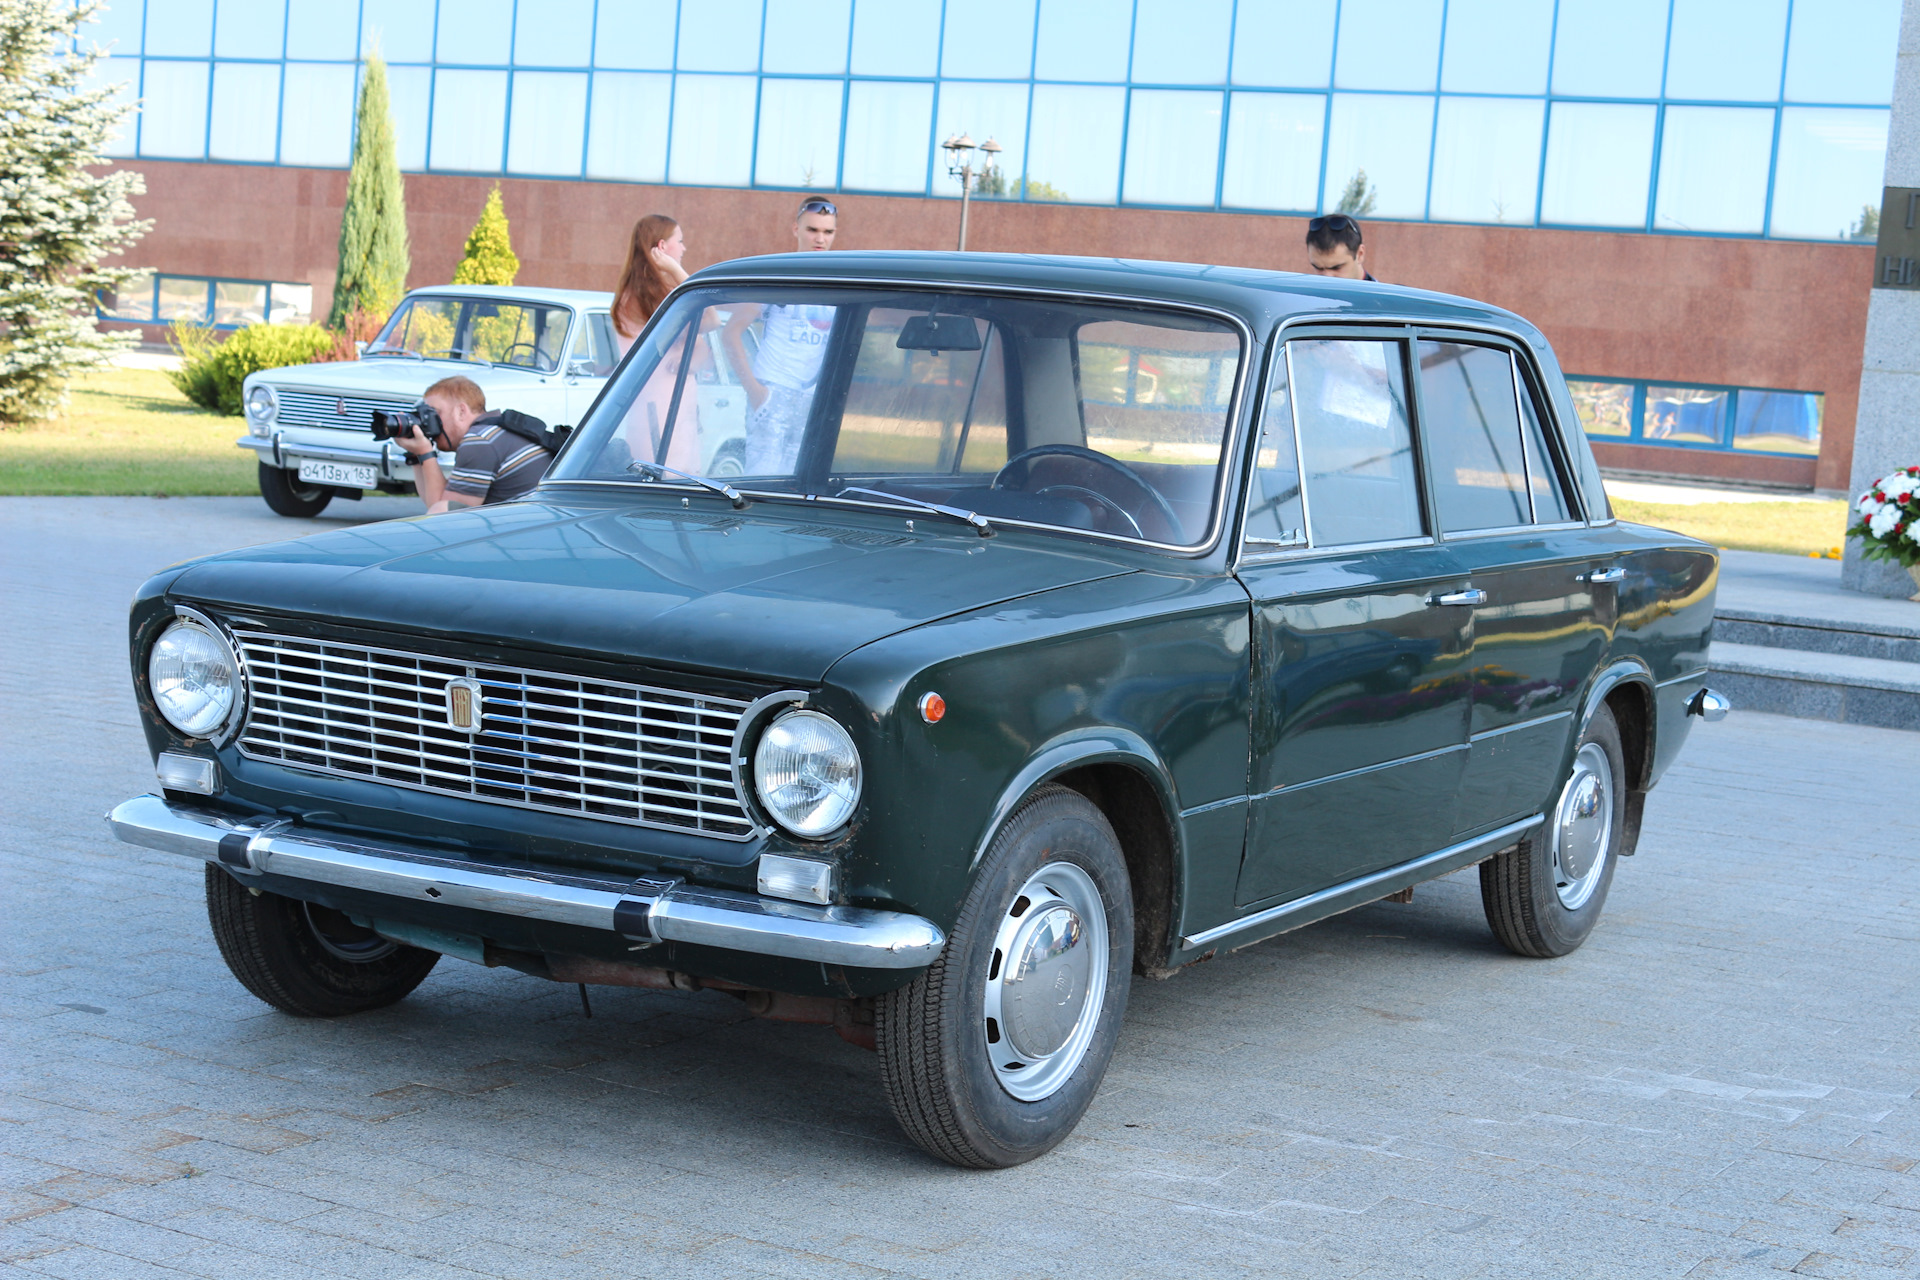 Год выпуска фиат. Fiat 124. Фиат 124 Berlina. 124 Fiat 124 Fiat 124. Fiat 124 1970.